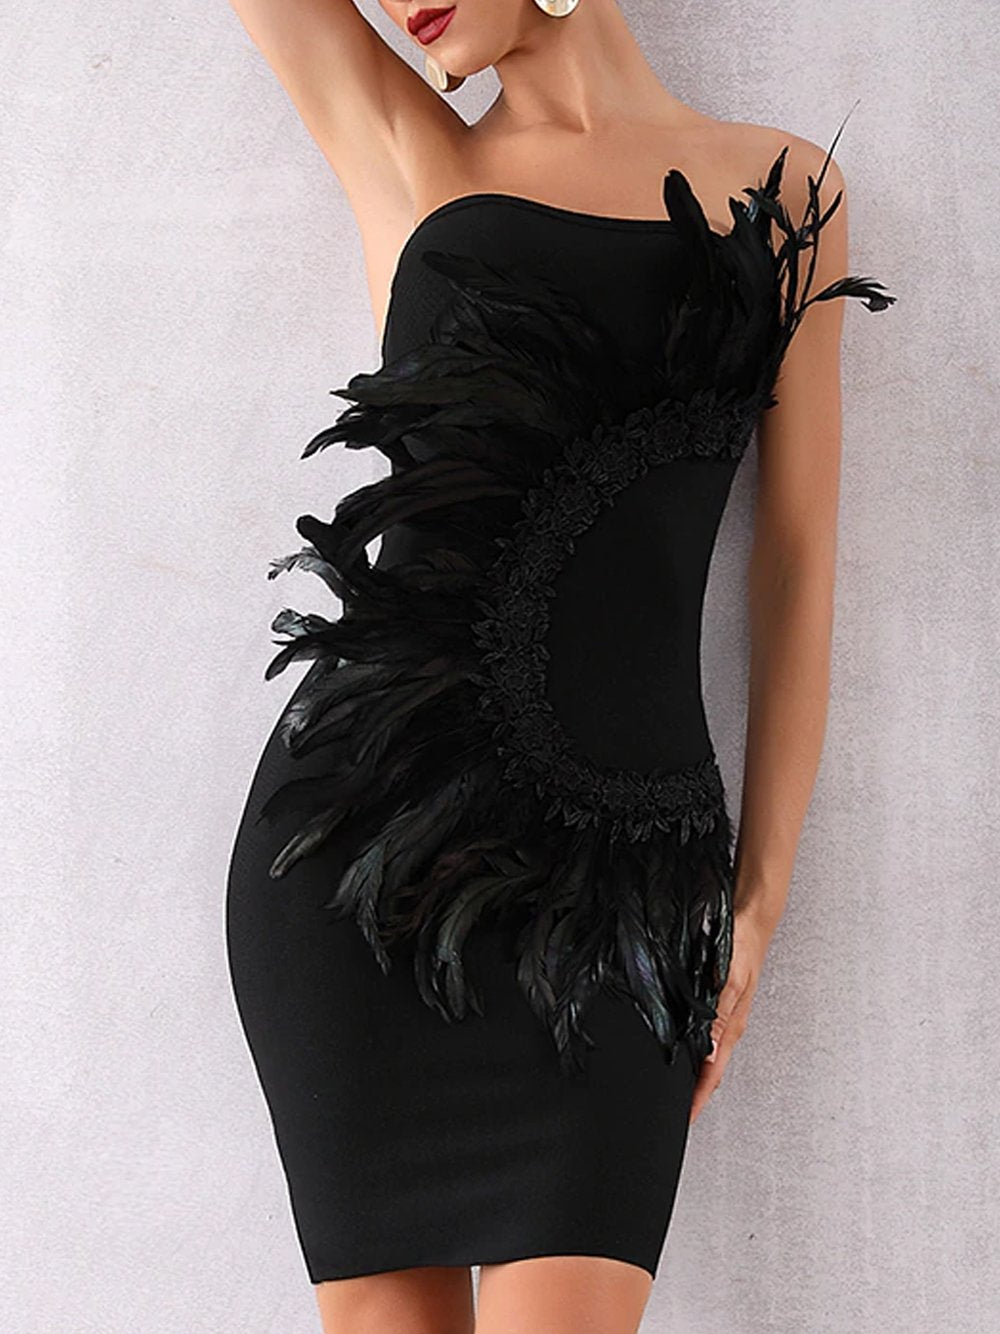 GEMINI Strapless Feathered Dress